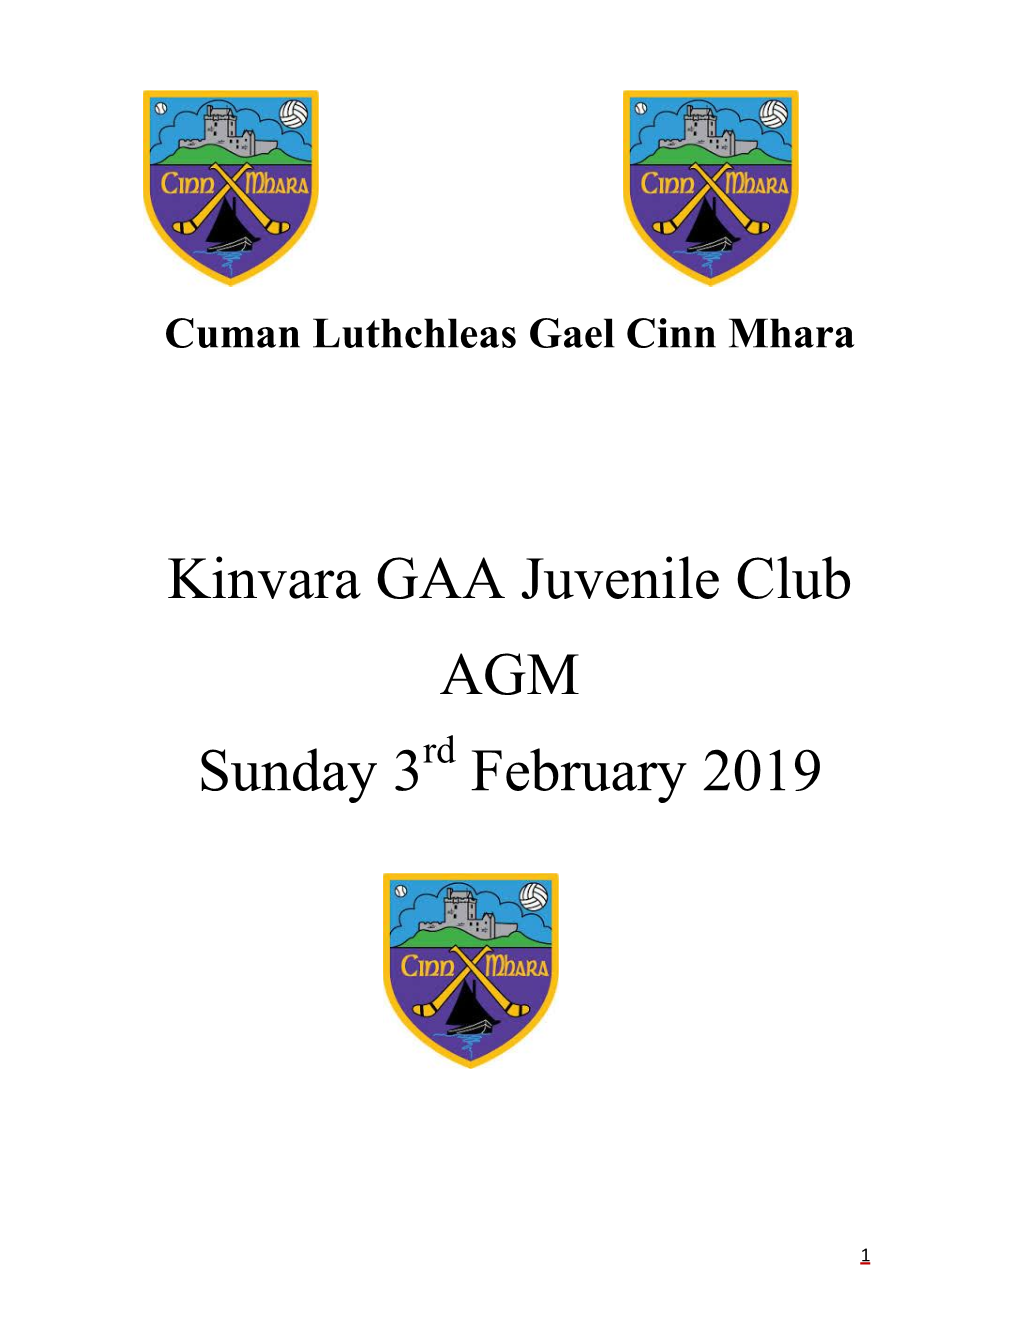 Kinvara GAA Juvenile Club AGM Sunday 3 February 2019